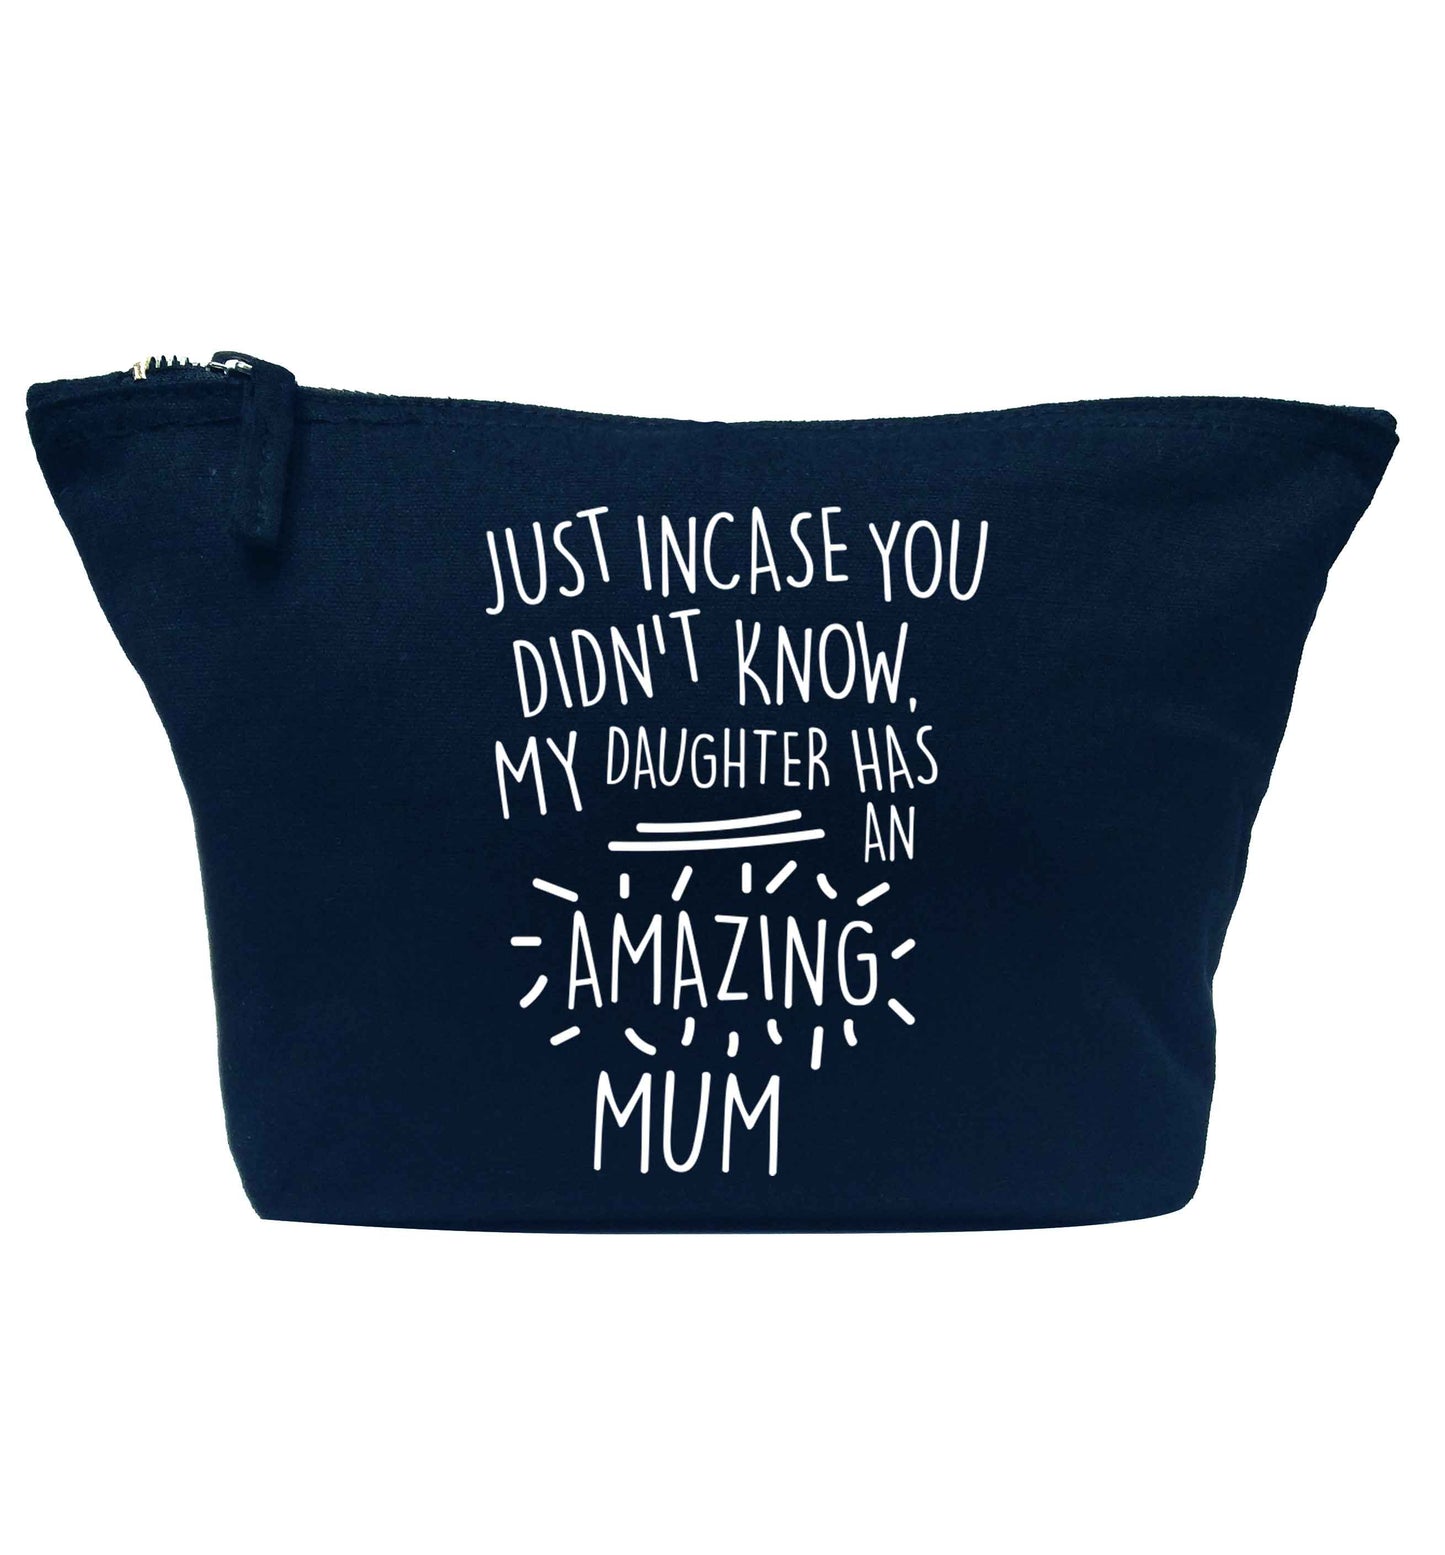 Just incase you didn't know my daughter has an amazing mum navy makeup bag